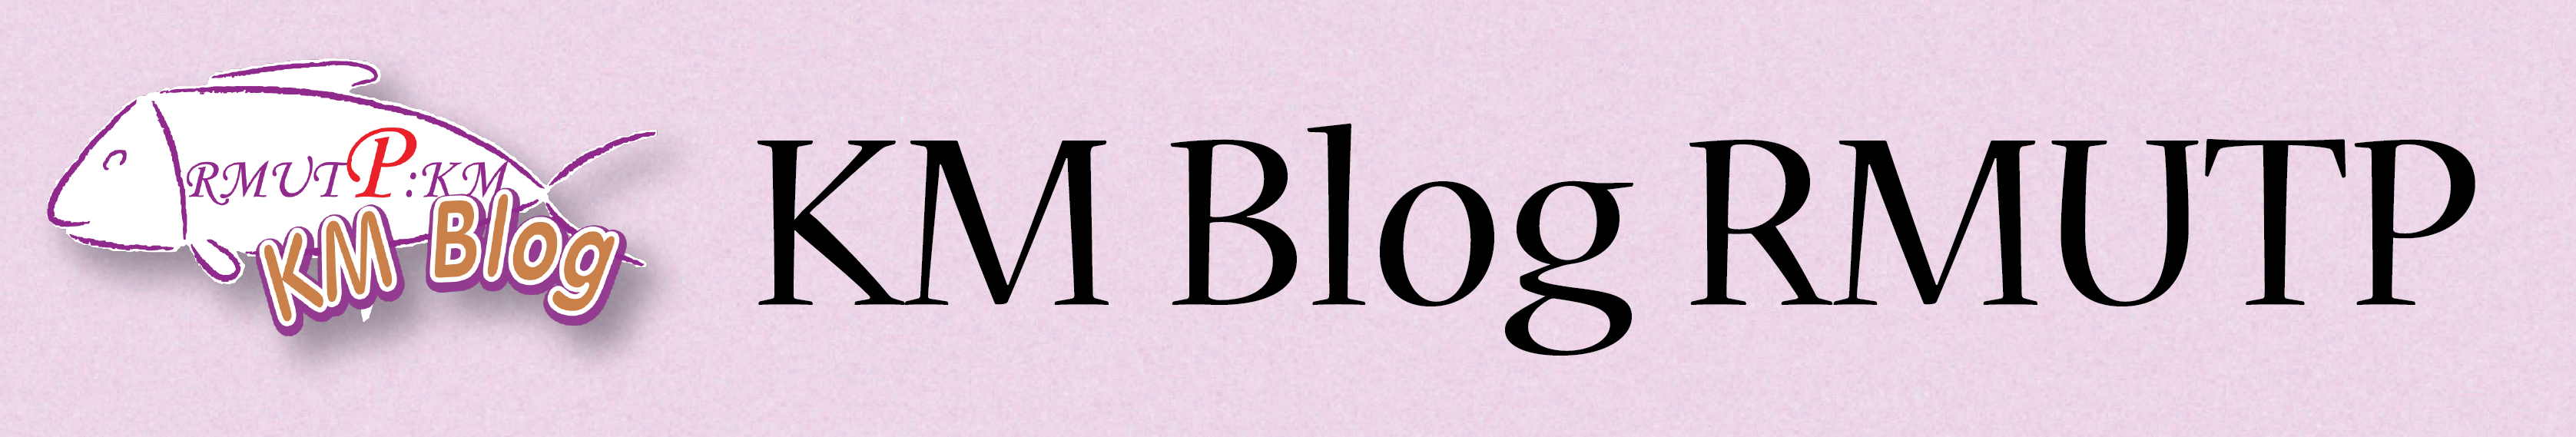 KMblog-banner